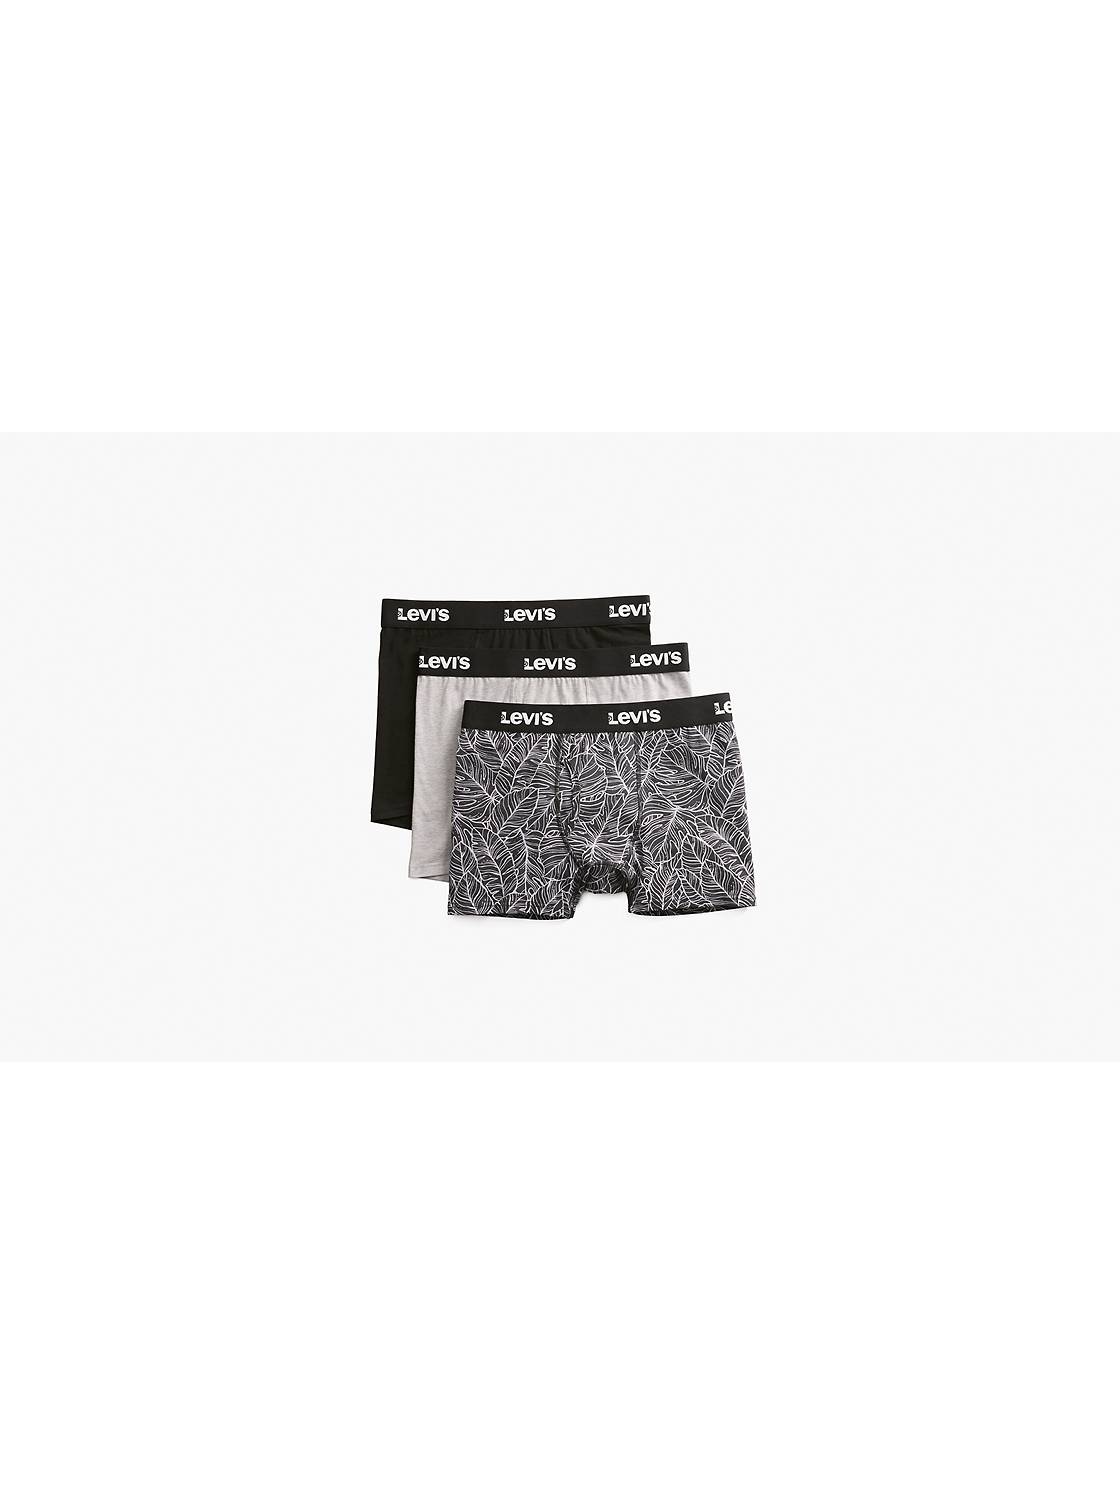 Just My Size By Hanes Women's 5pk Cotton Stretch Underwear -  Black/pink/gray 10 : Target